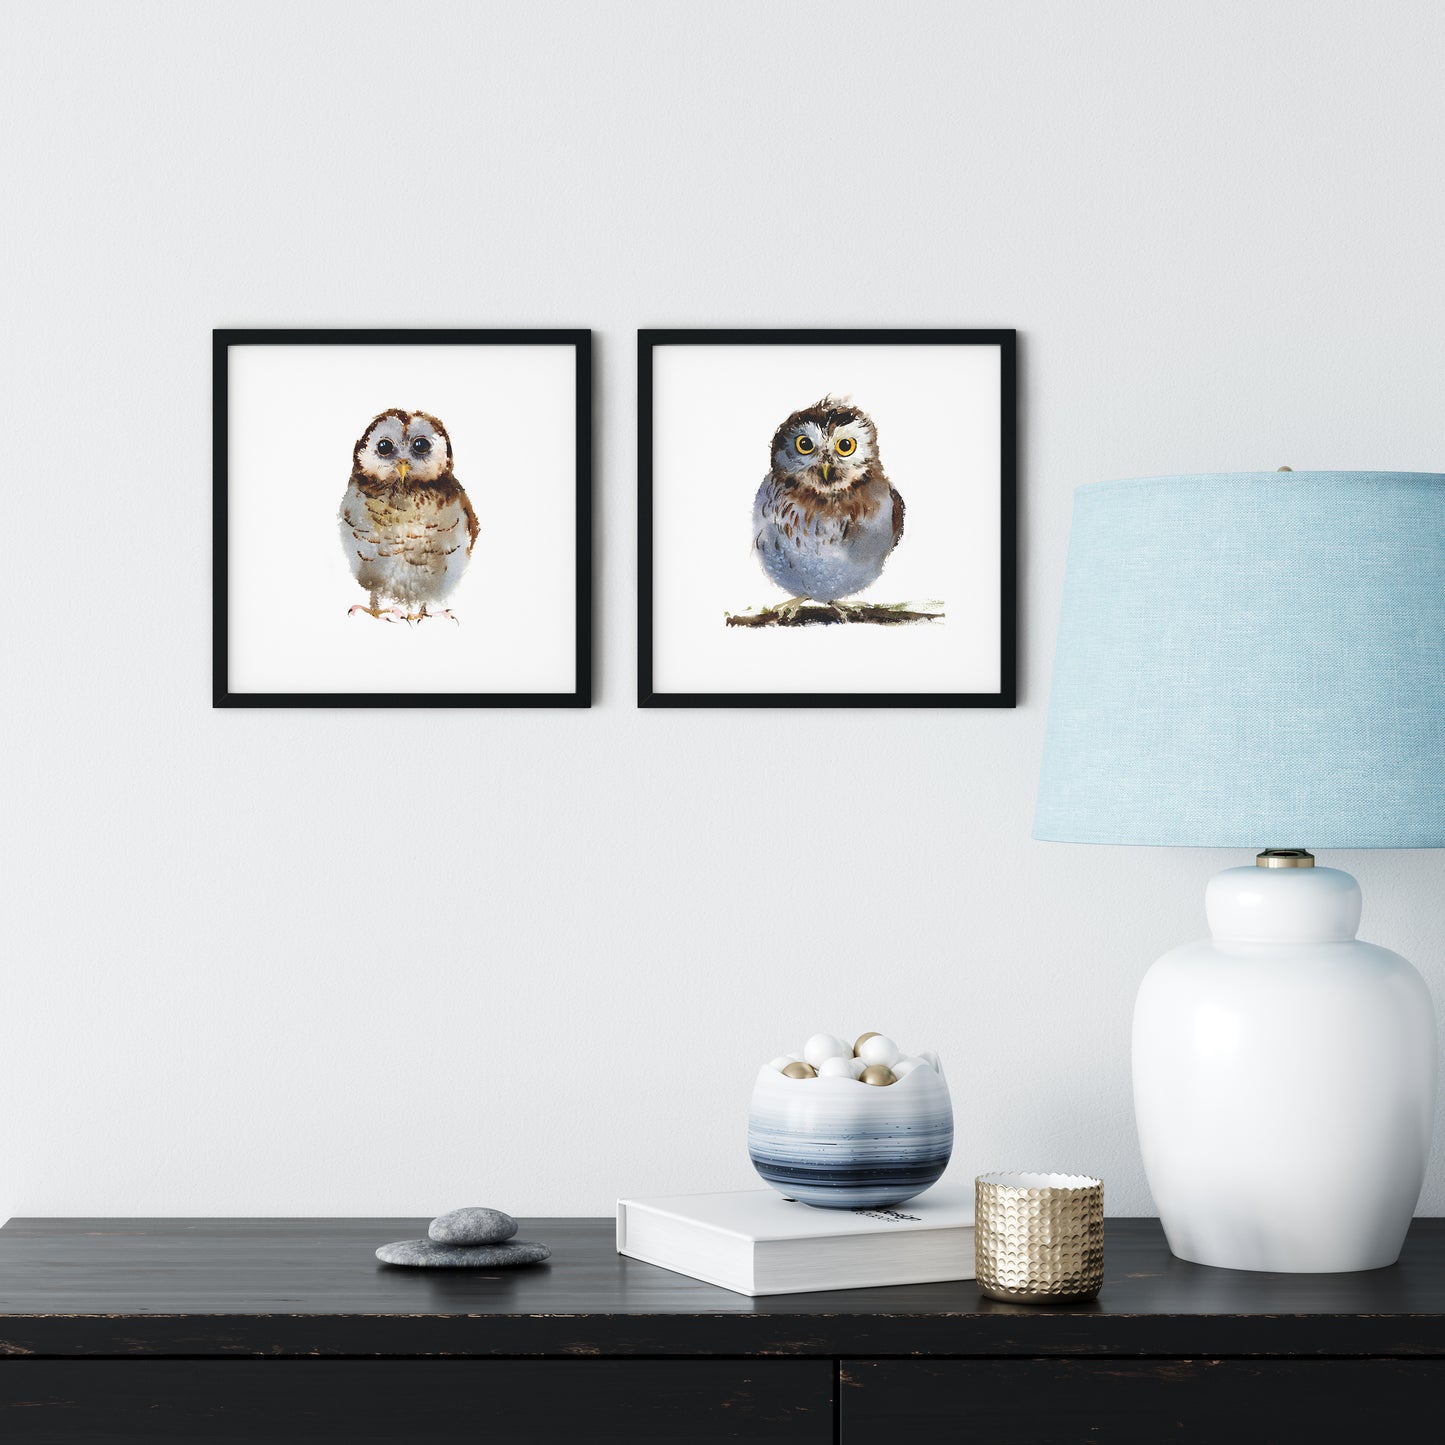 Cute Angry Owl Set of 2 Art Prints, Watercolor Prints, Gray Birds, Bird Animal Kids Room Wall Decor, Wildlife Print